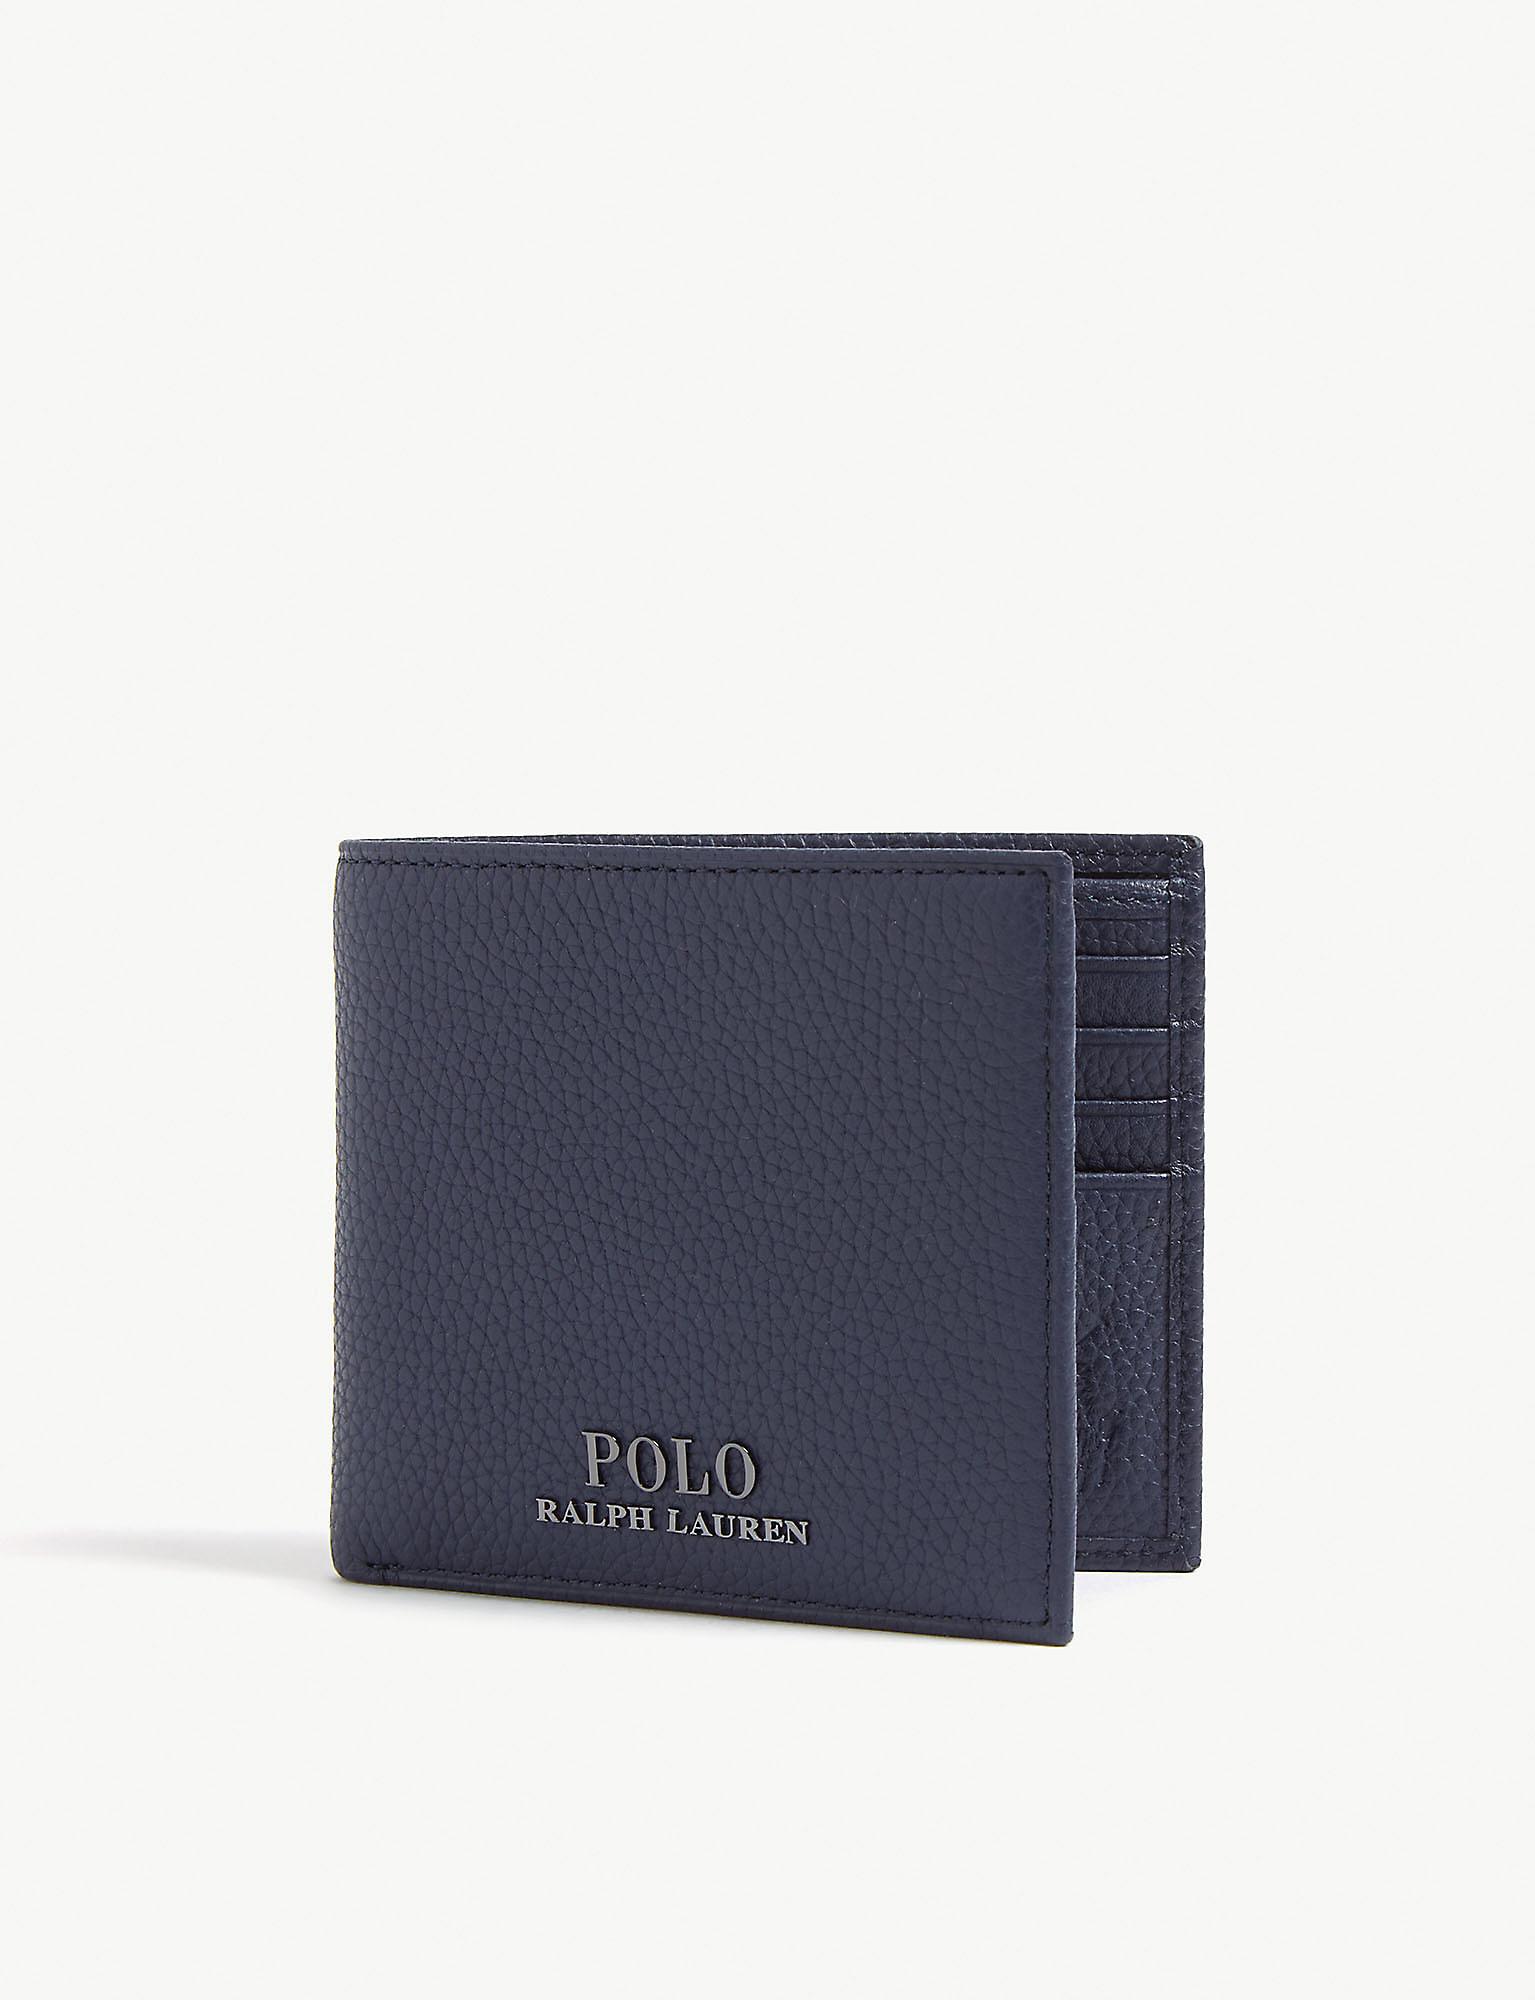 Polo Ralph Lauren Logo Grained Leather Billfold Wallet in Navy (Blue) for  Men - Lyst